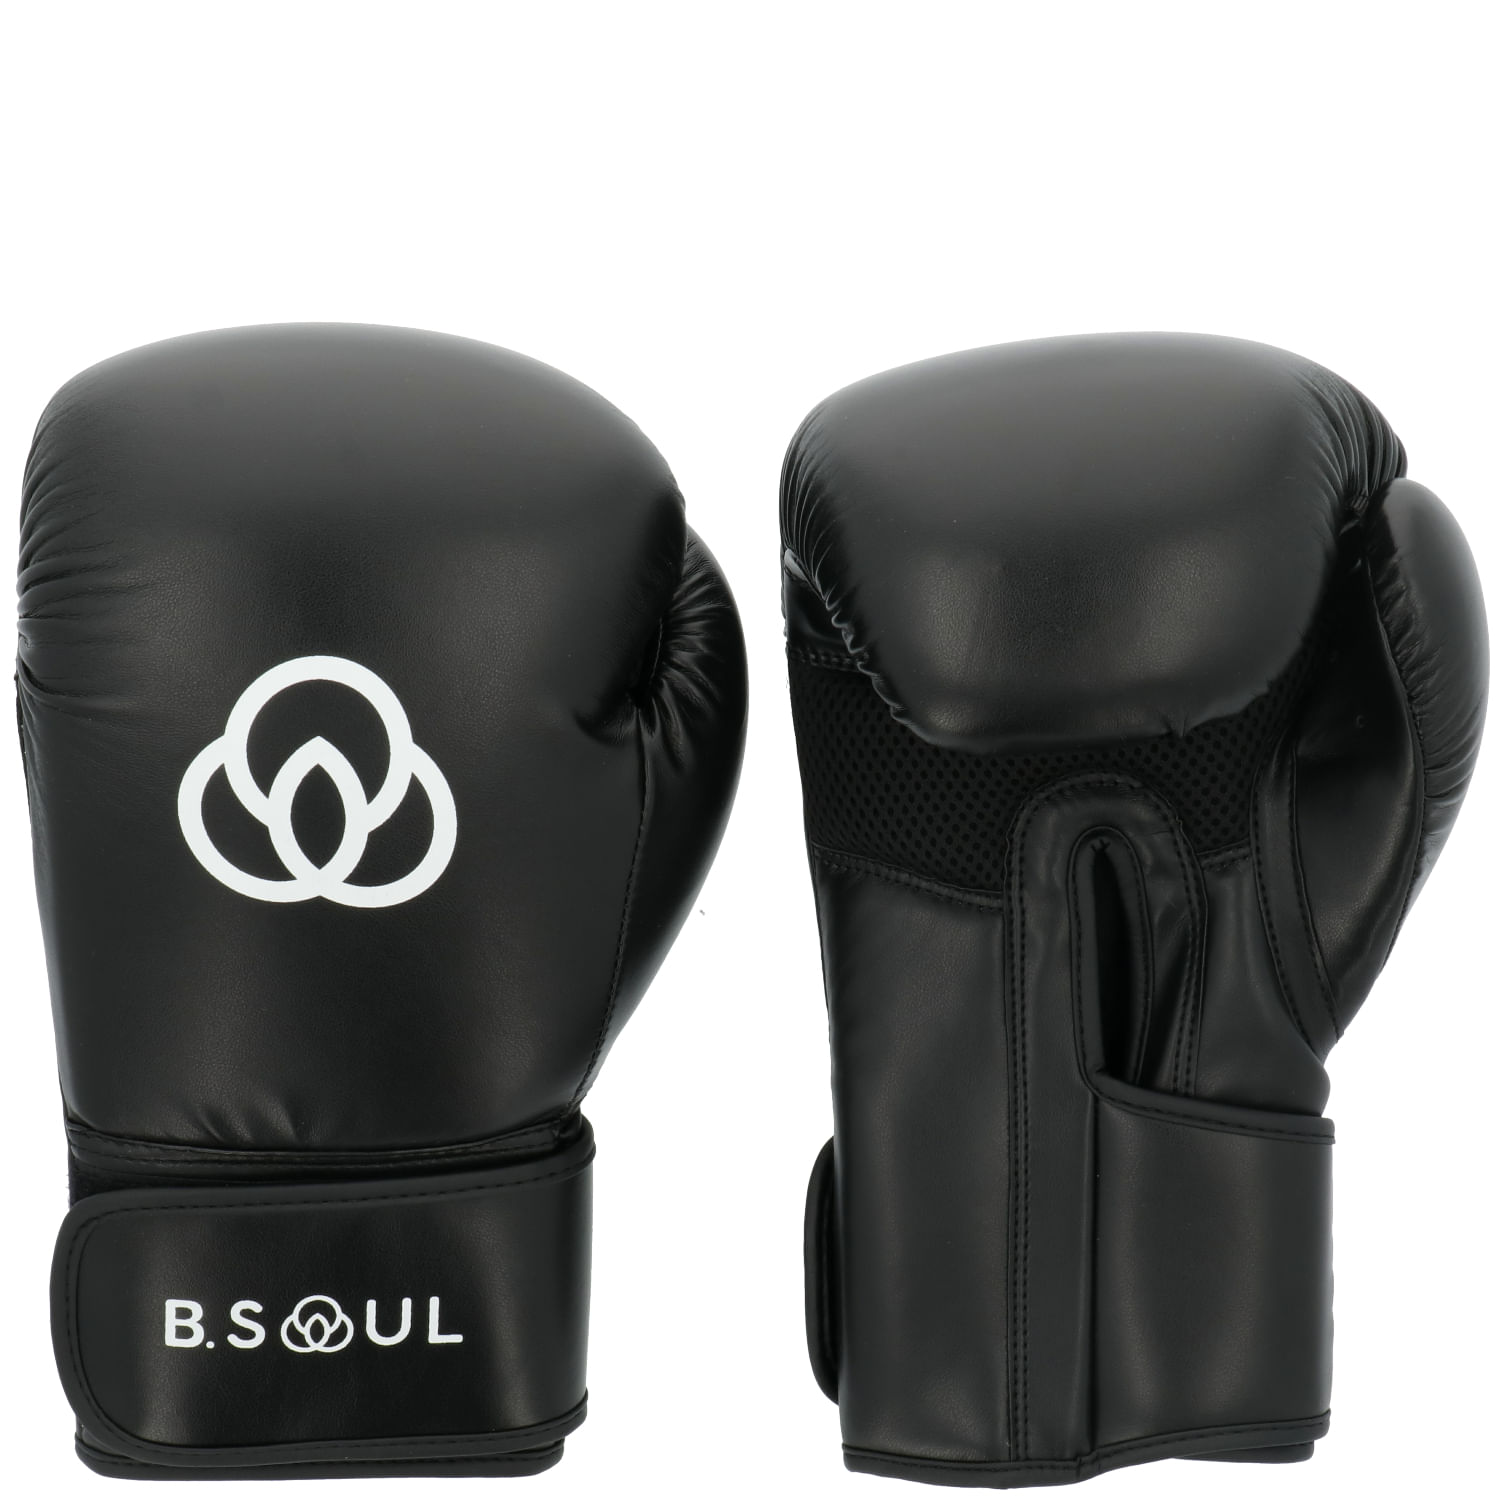 Comprar Giftoom Sport- Guantes de boxeo Yakuza - Venda de boxeo negra de 3,5  metros - Protector bucal de boxeo transparente en caja